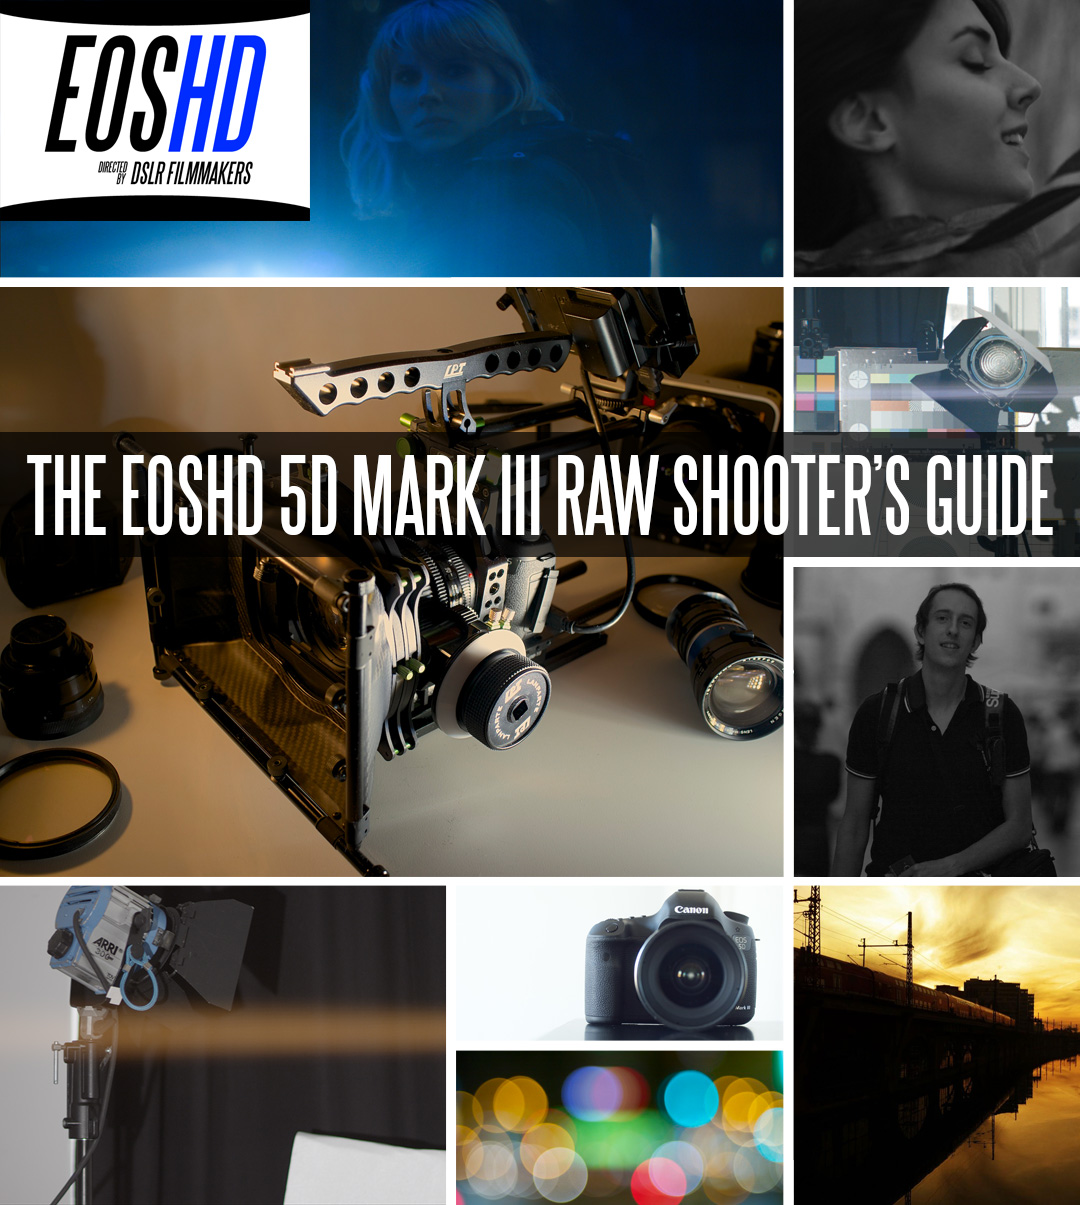 The EOSHD 5D Mark III Raw Shooter's Guide